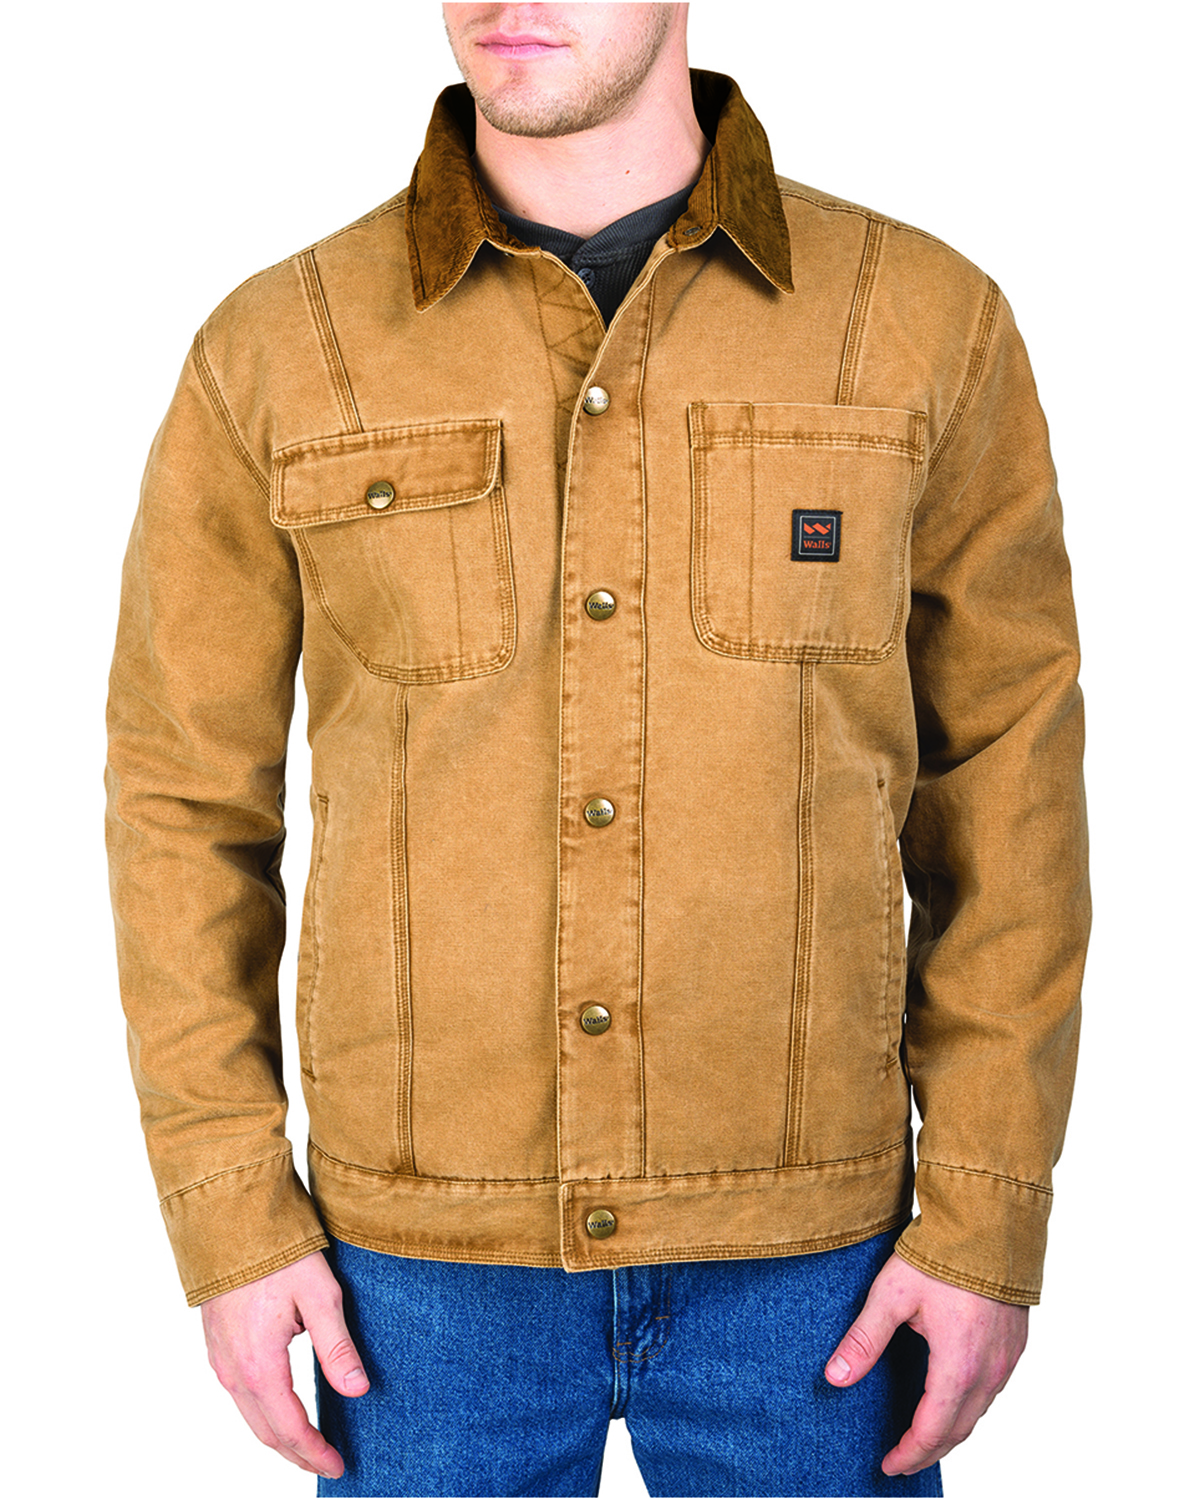 Walls Outdoor YJ293 - Unisex Ranch Amarillo Cotton Twill Duck Jacket